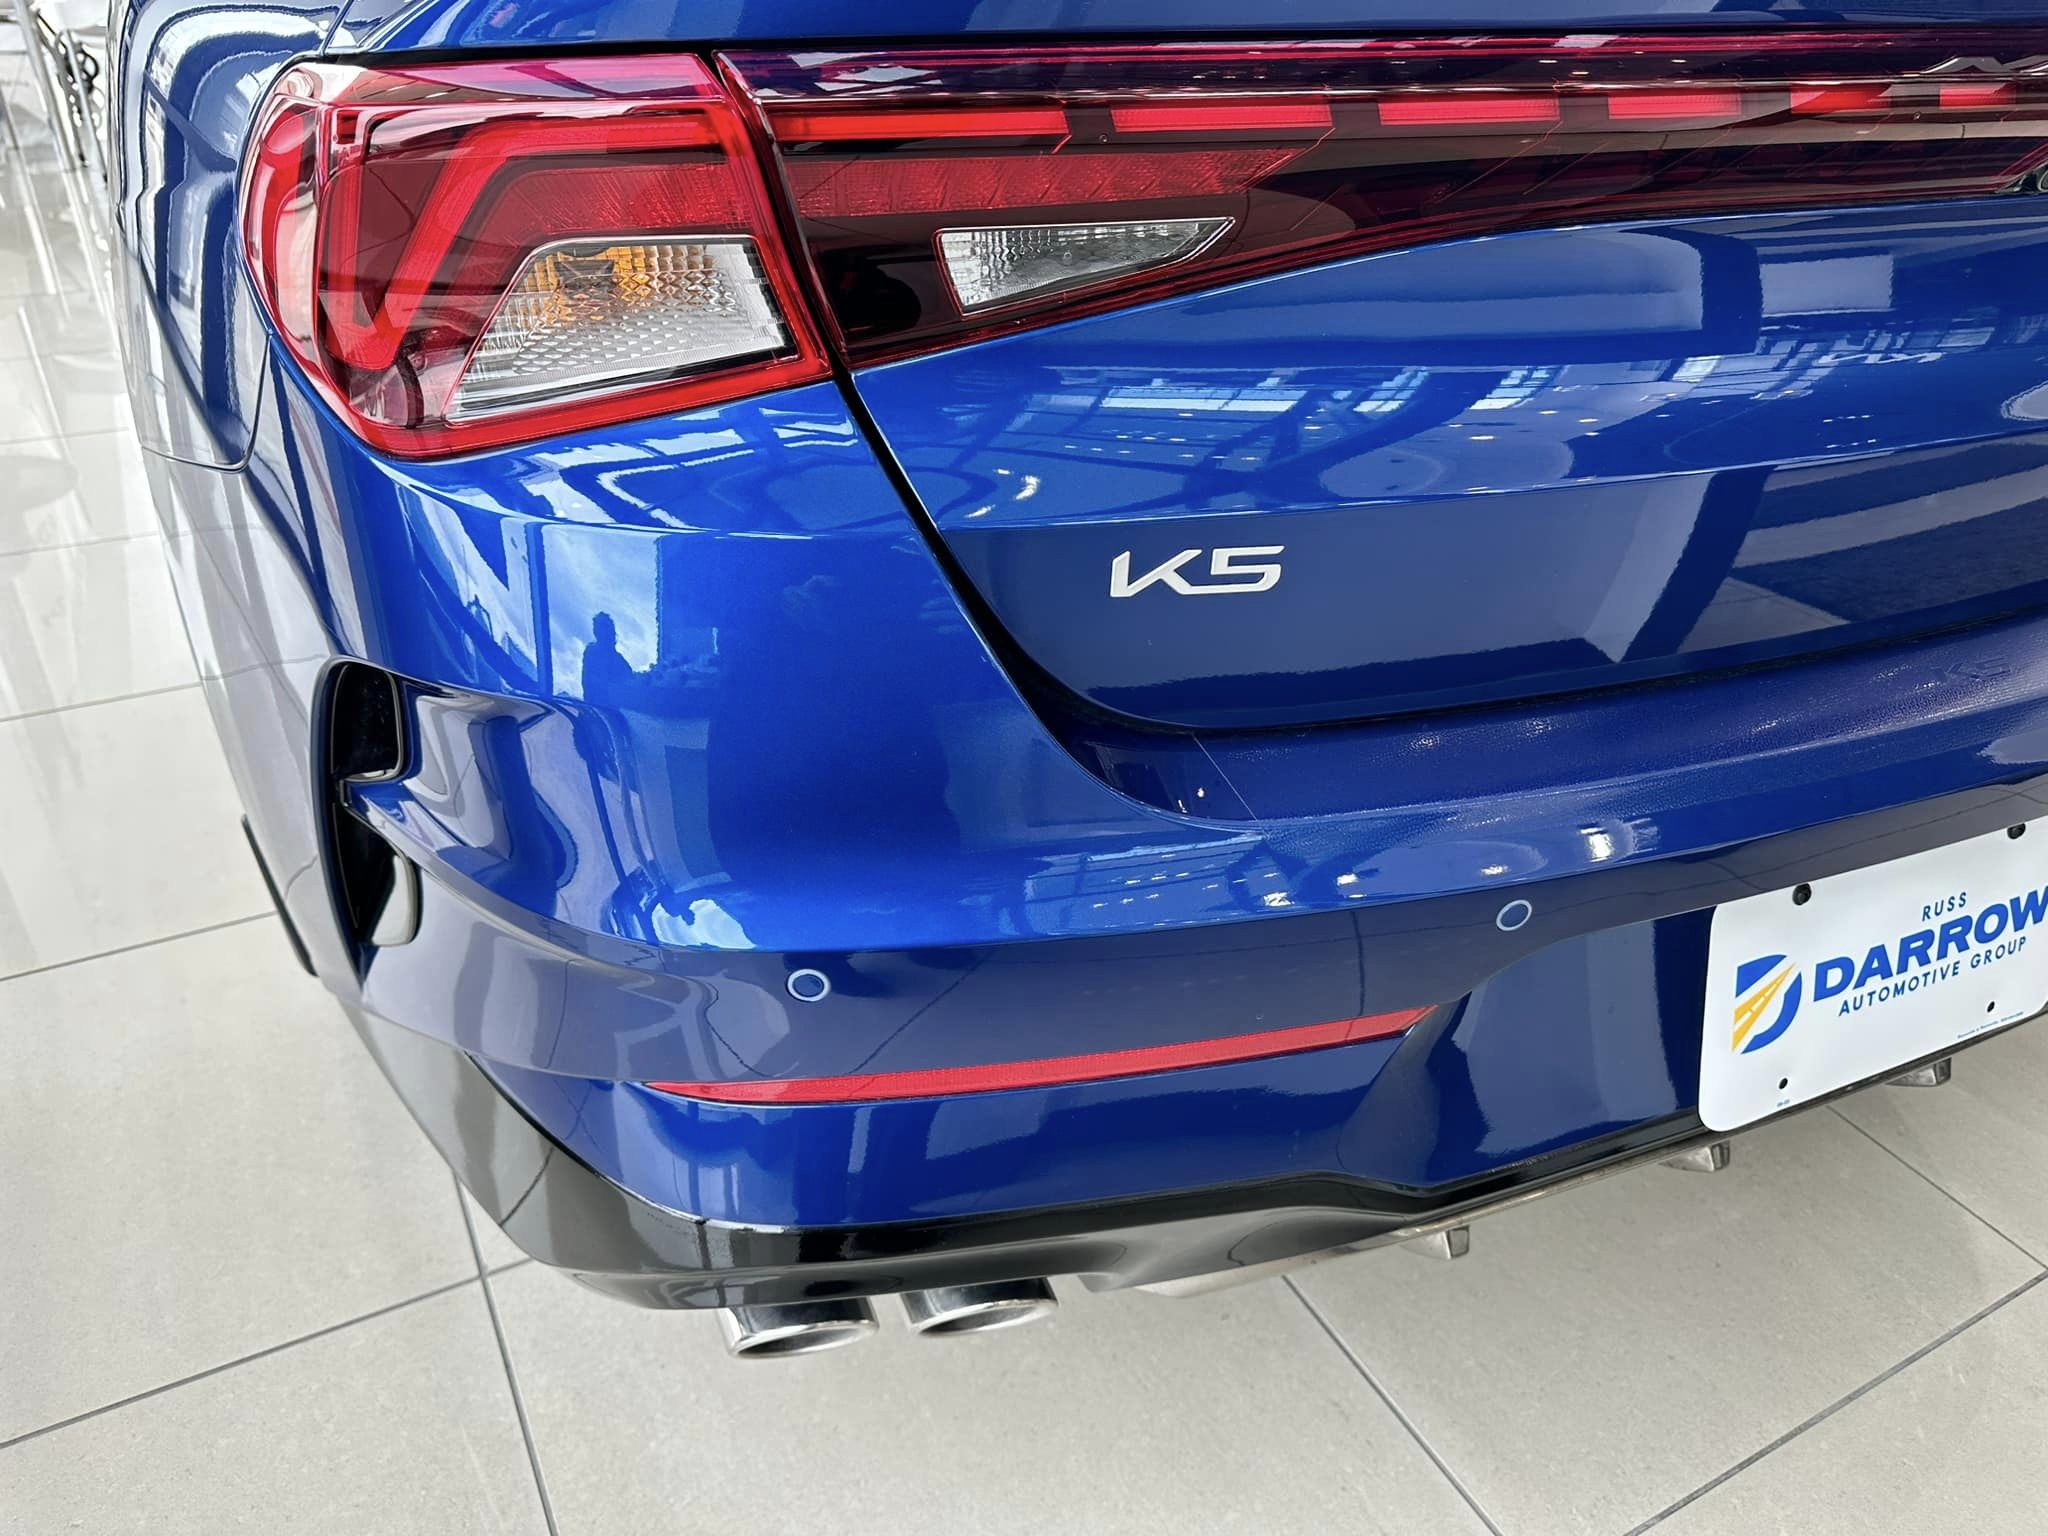 2023 Kia K5 - Saphire Blue GT FWD - Rear Driver's Side View